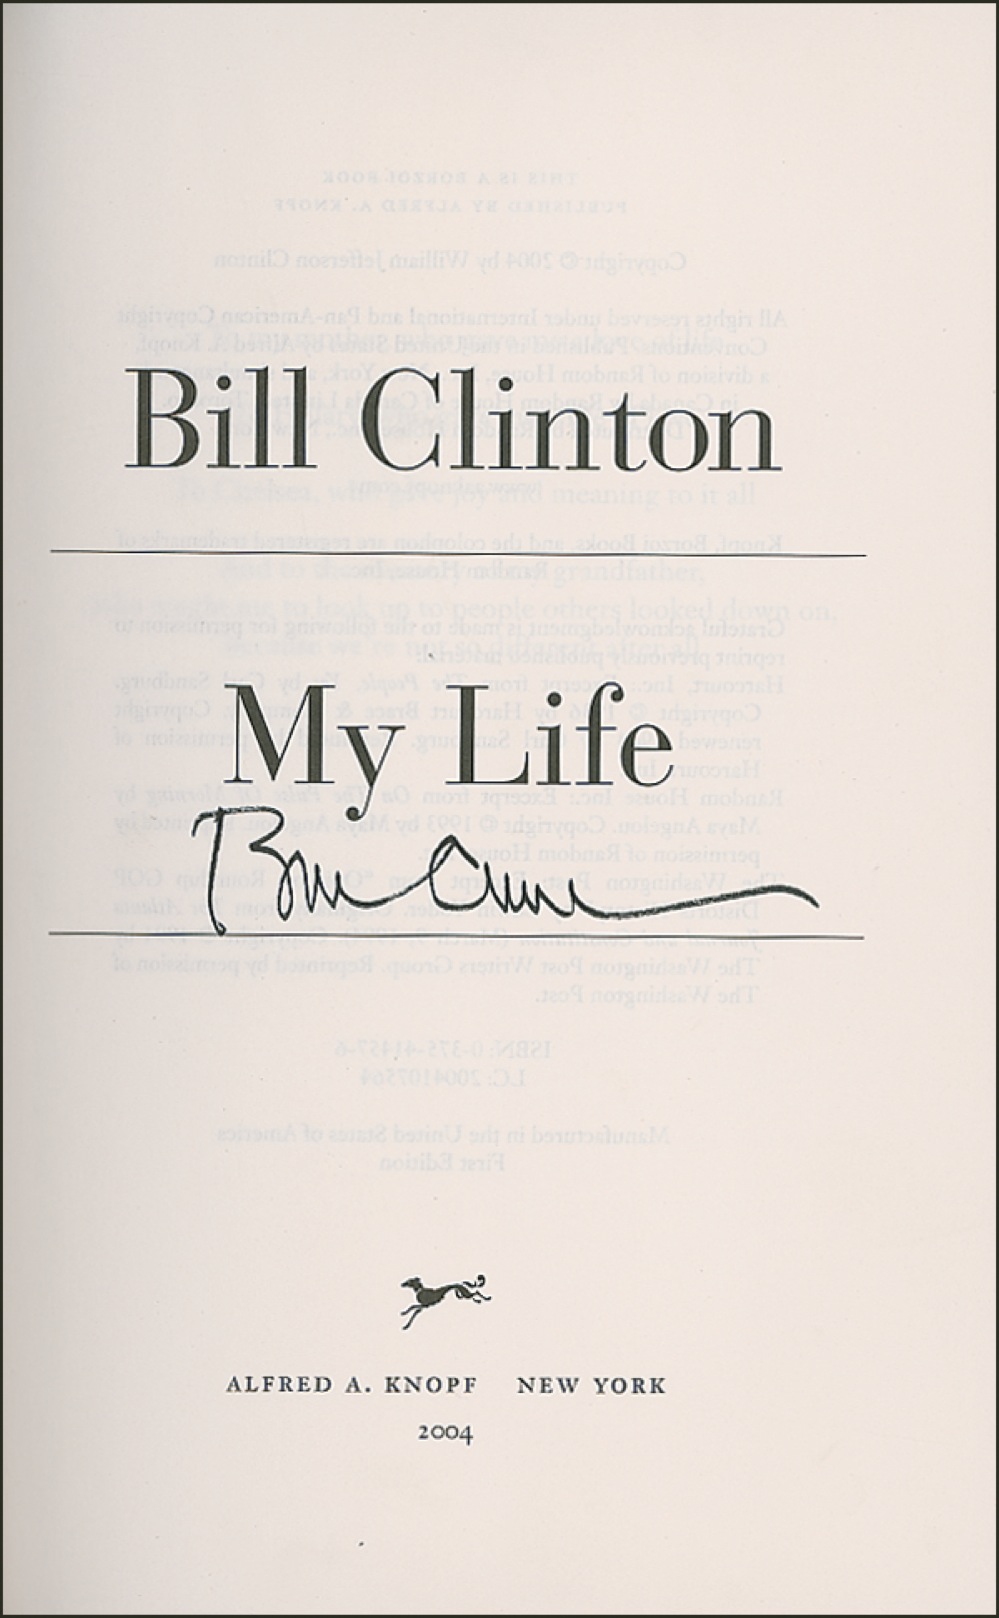 Lot #8 Bill Clinton